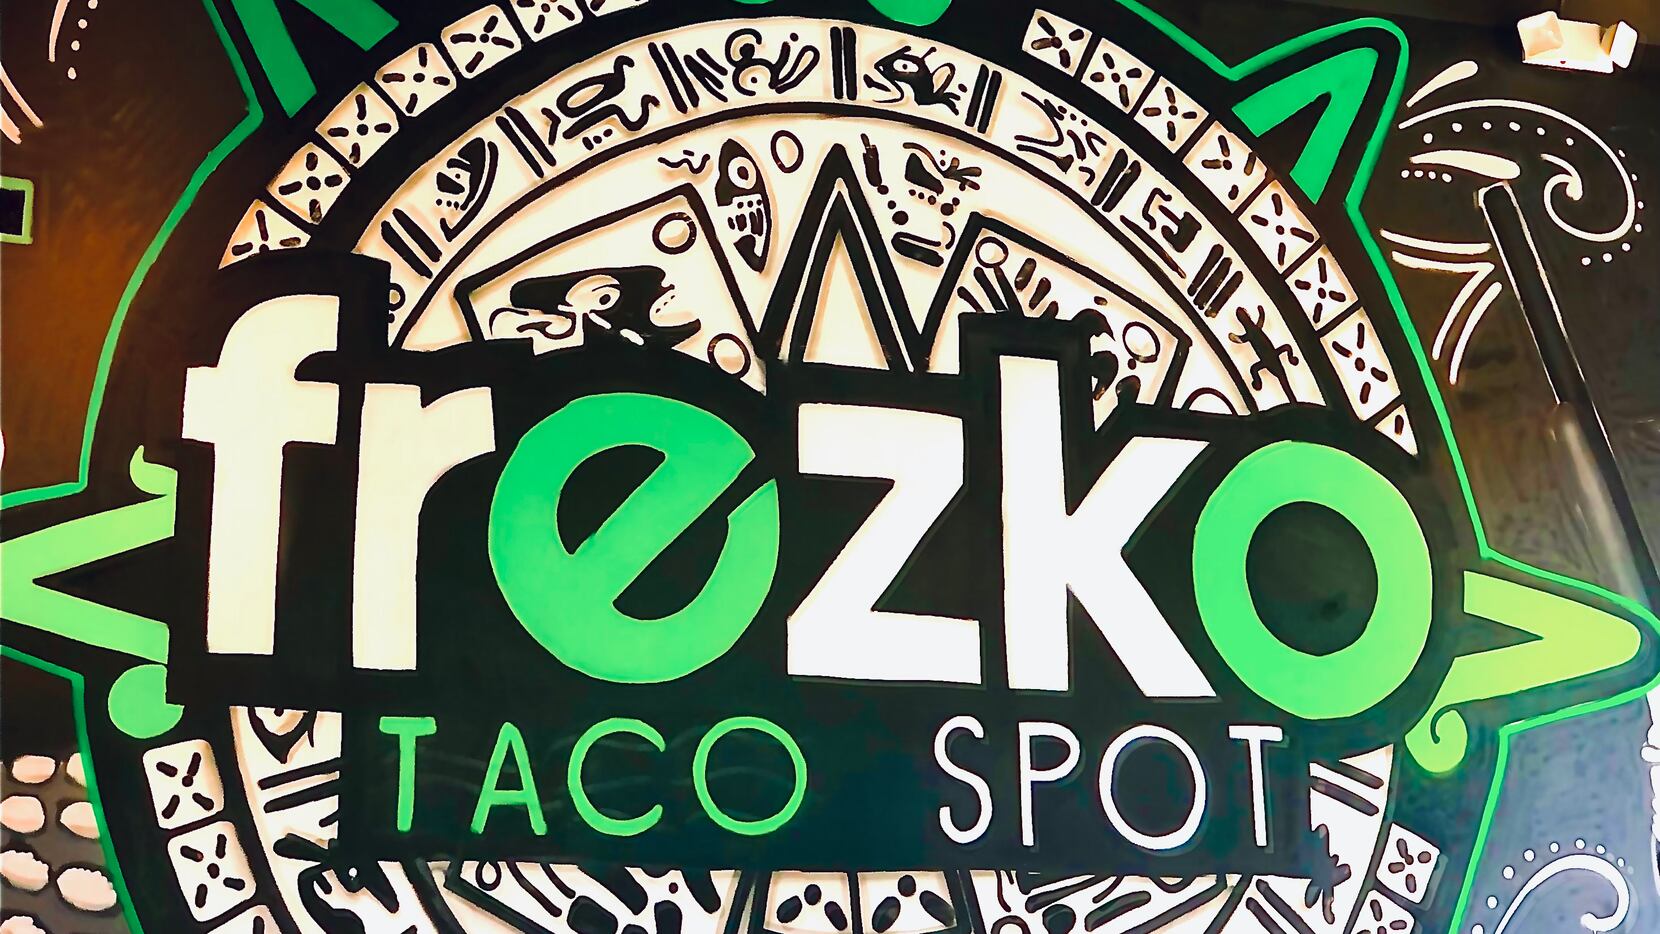 Fort Worth artist Juan Velazquez has painted several murals inside the new Frezko Taco Spot...